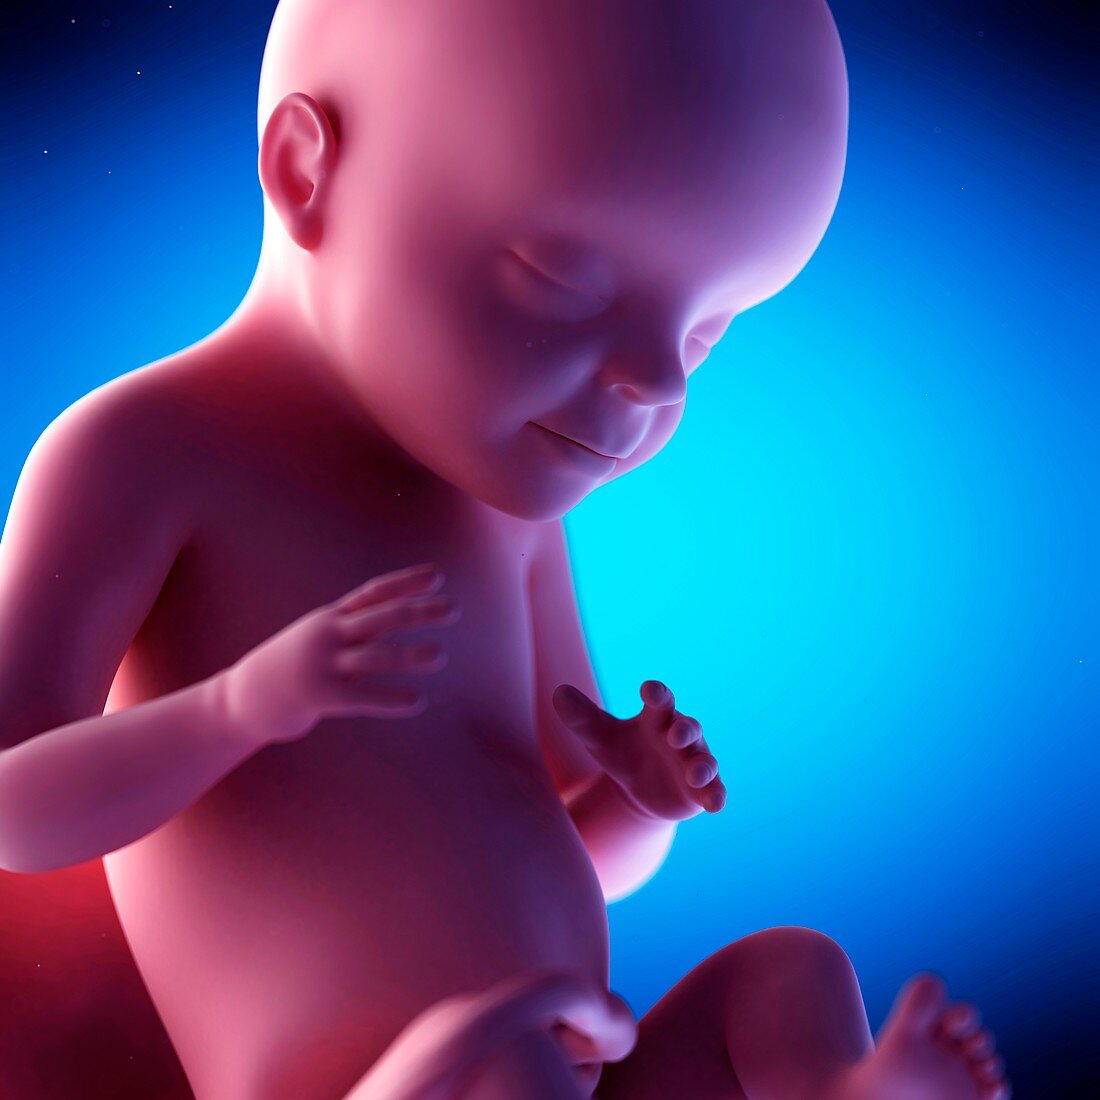 Human fetus at week 28 of gestation, illustration